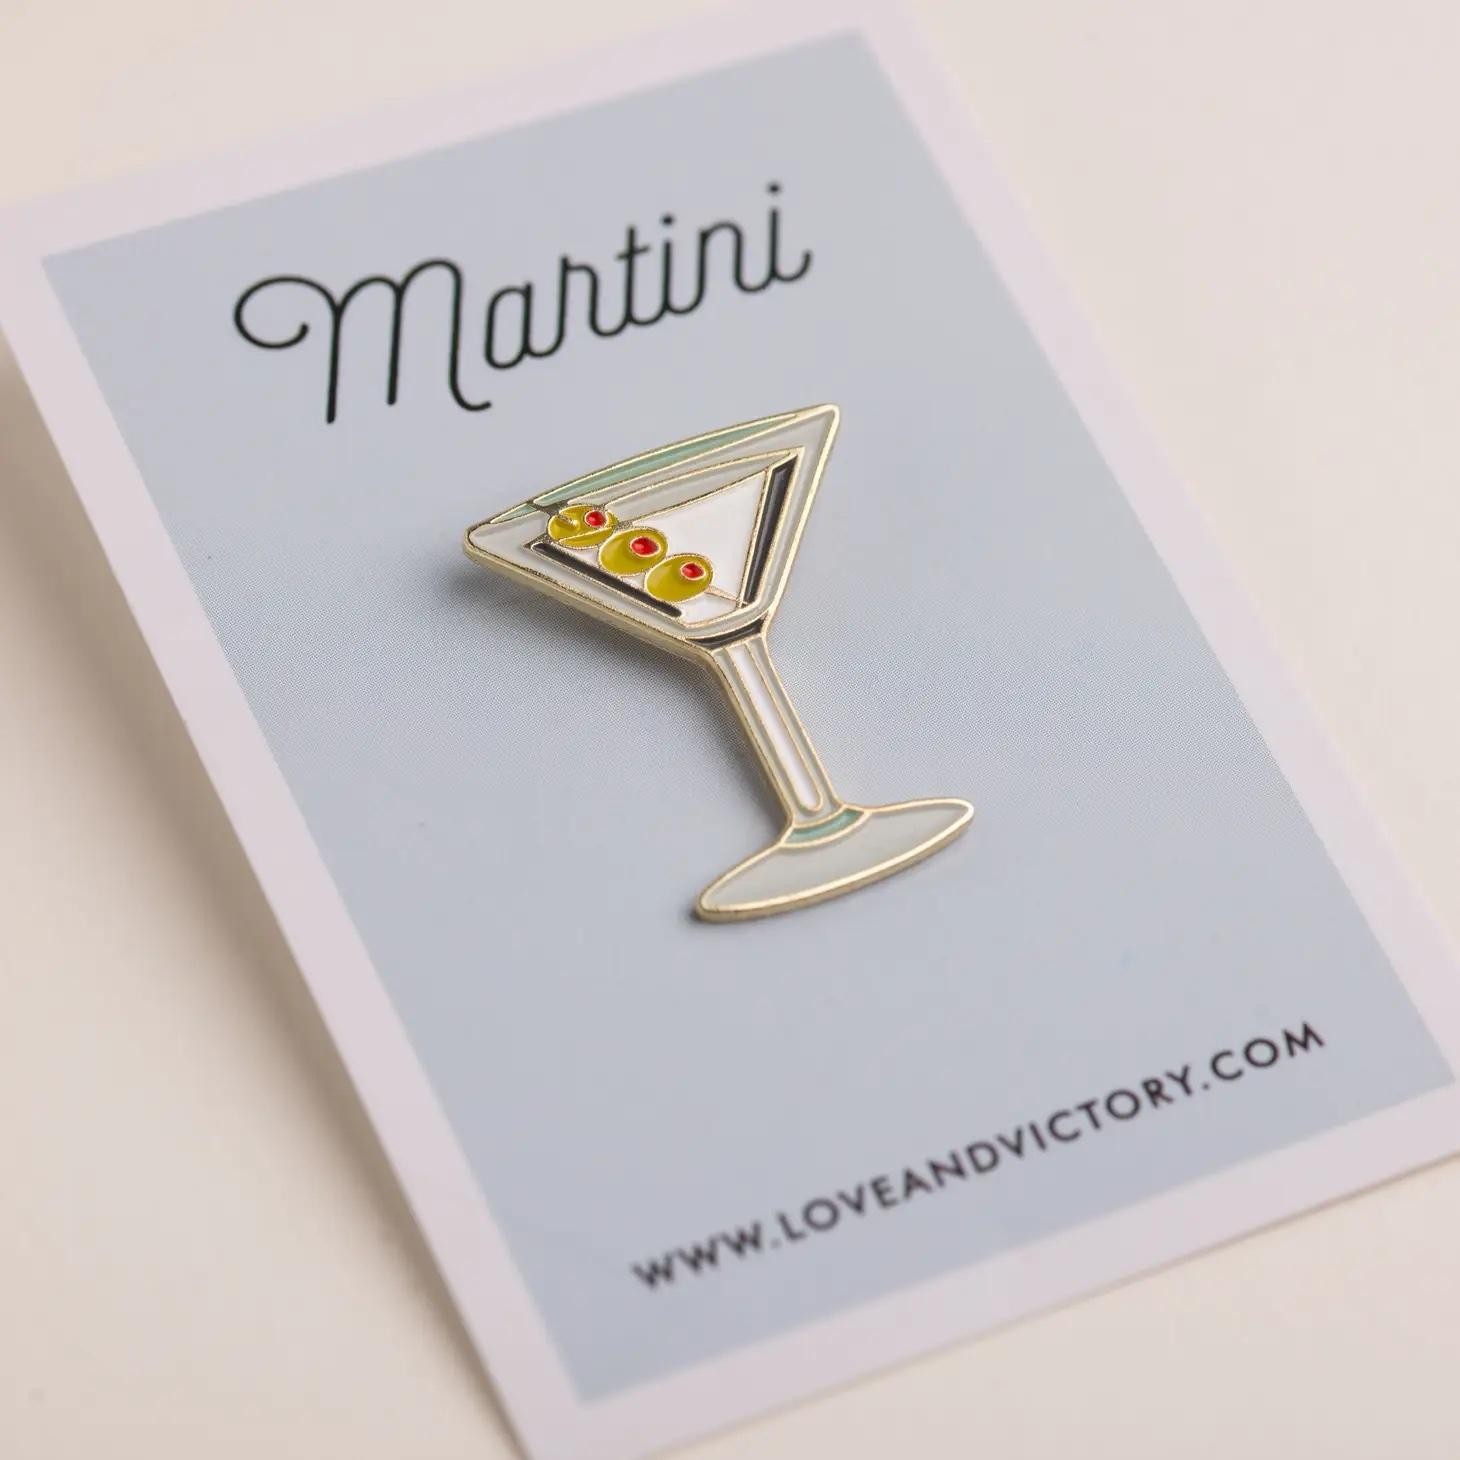 LOV Martini cocktail pin